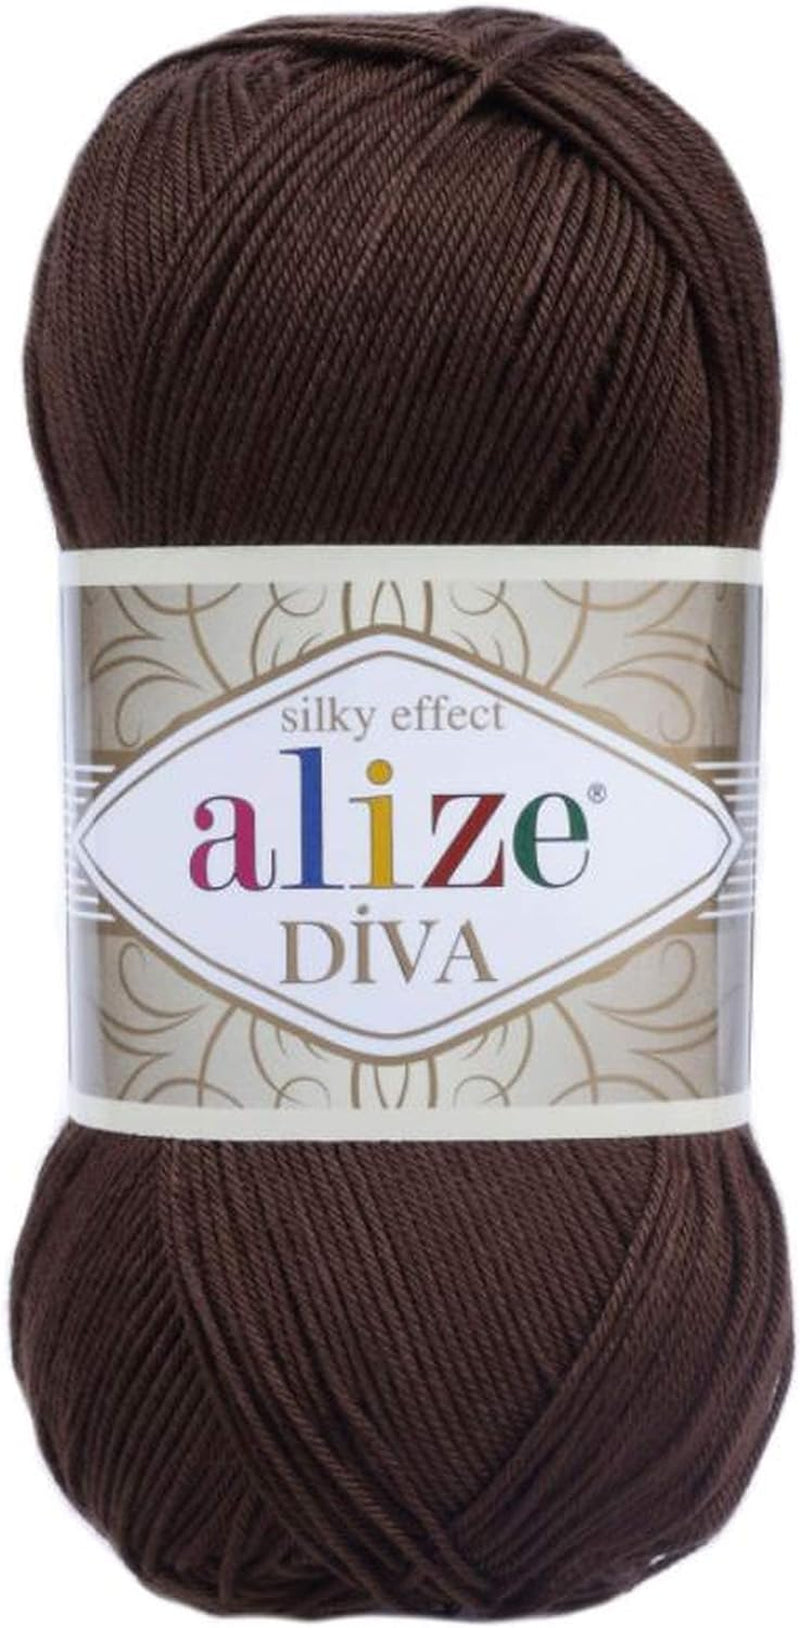 Diva Silk Effect 100% Microfiber Acrylic Yarn 1 Ball Skeins 100Gr 383Yds Color (361 - Navy)